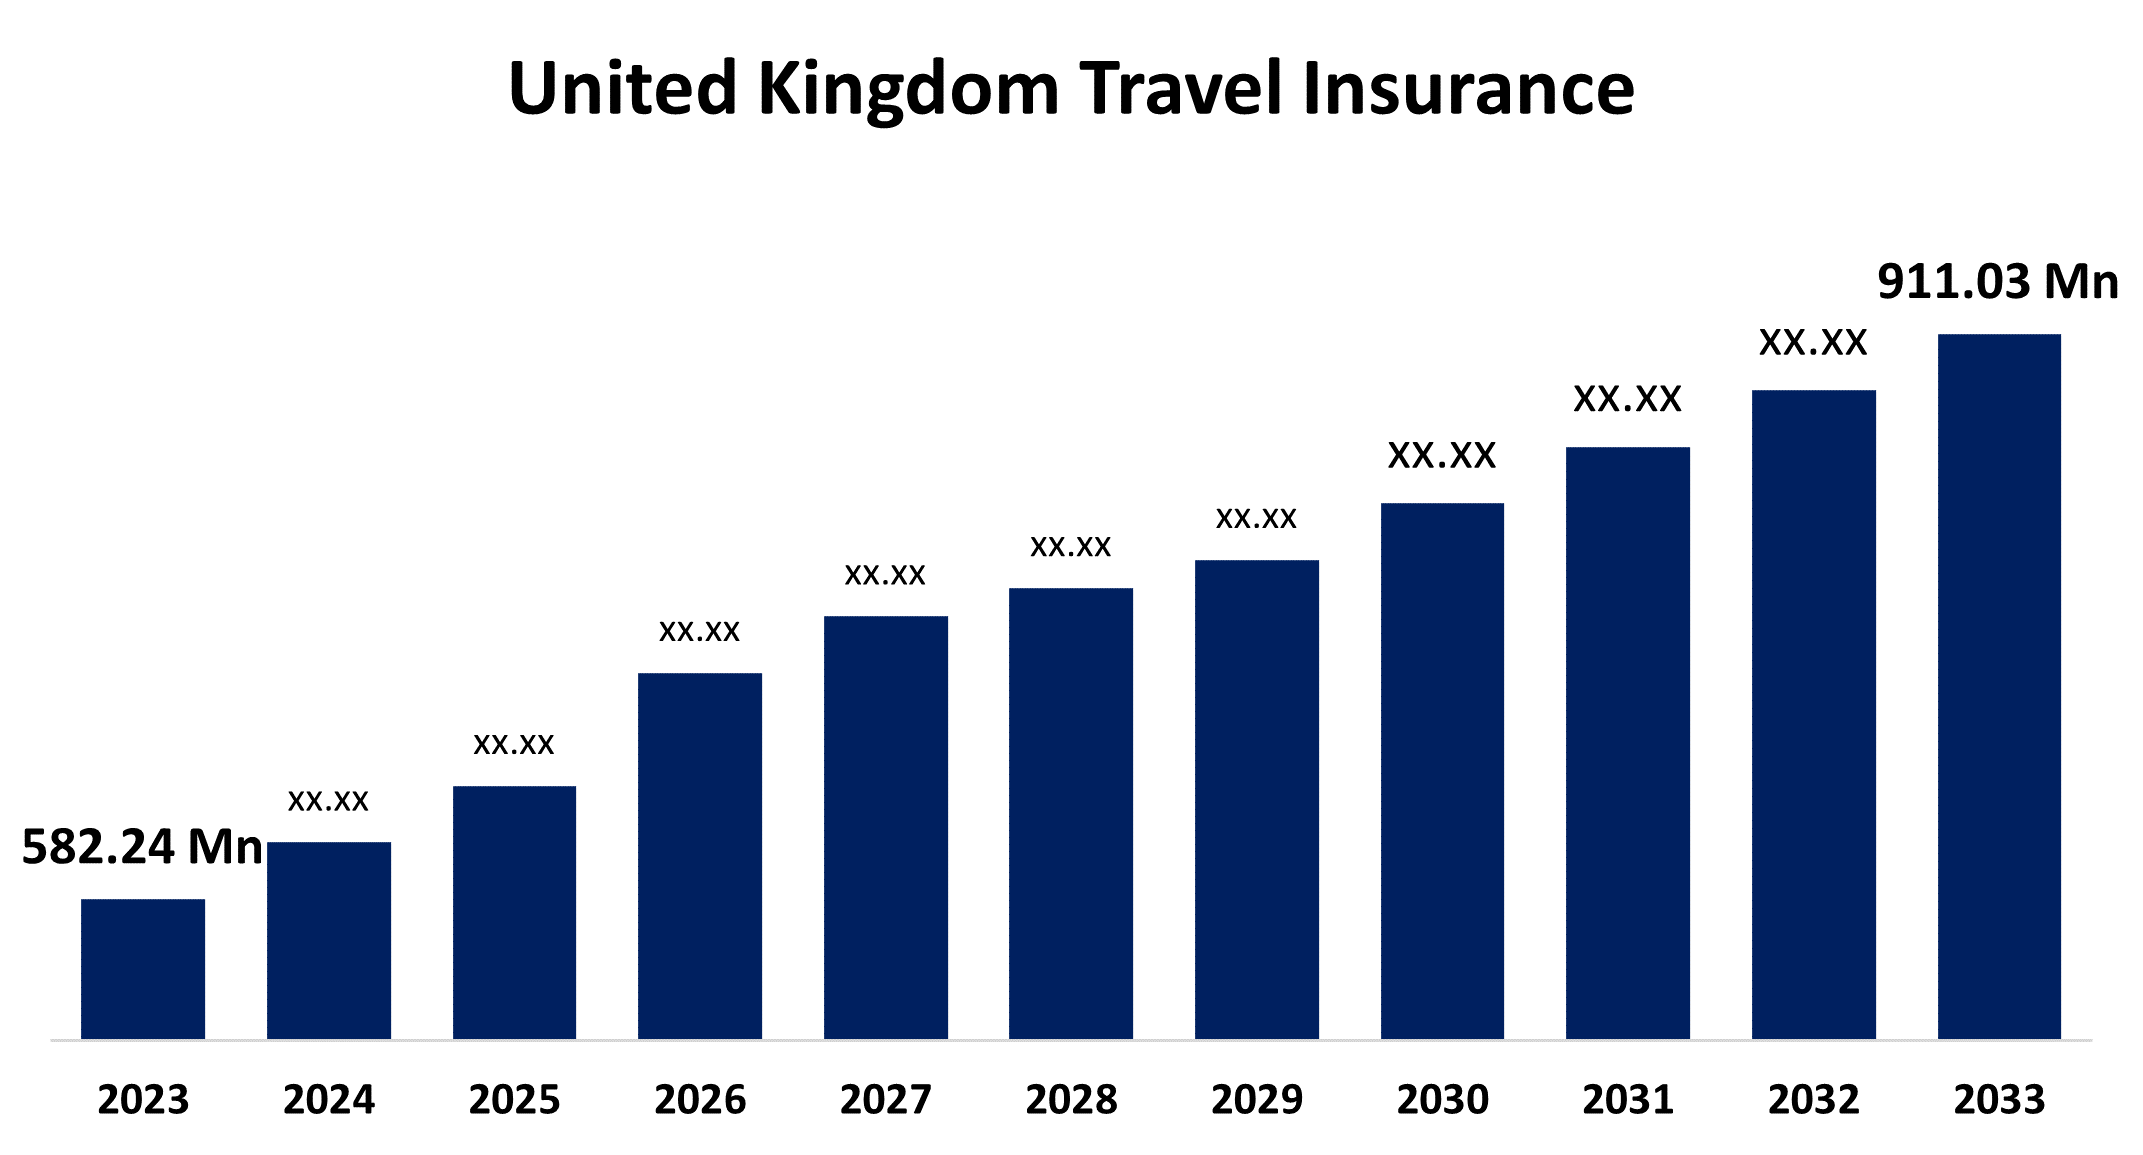 United Kingdom Travel Insurance Market 